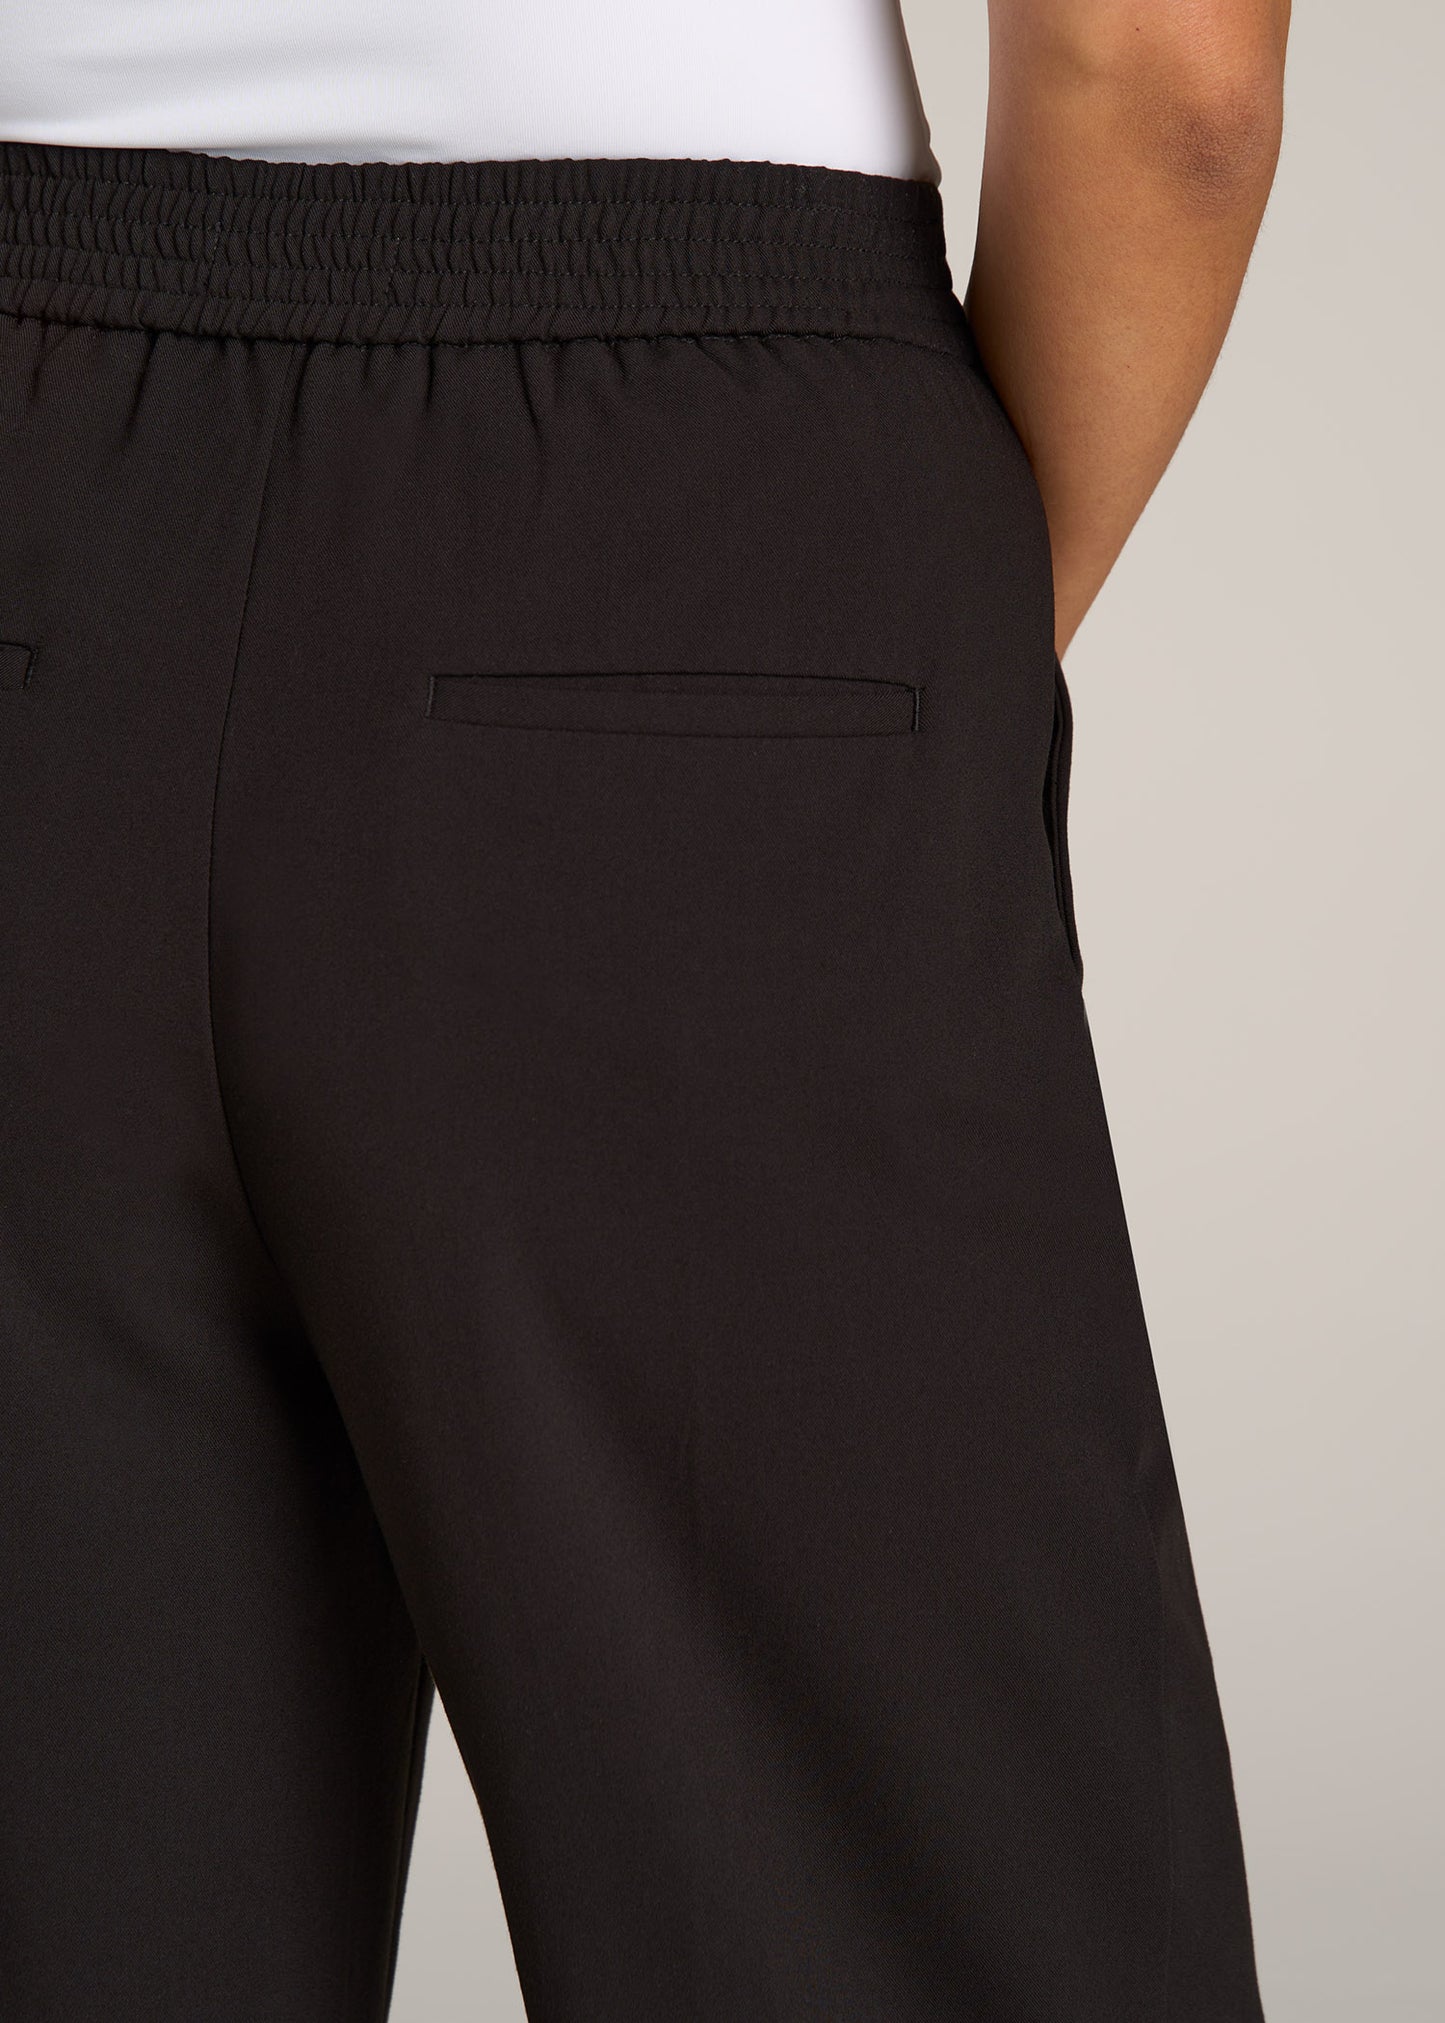 Buy the NWT Womens Black Flat Front Pockets Wide Leg Dress Pants